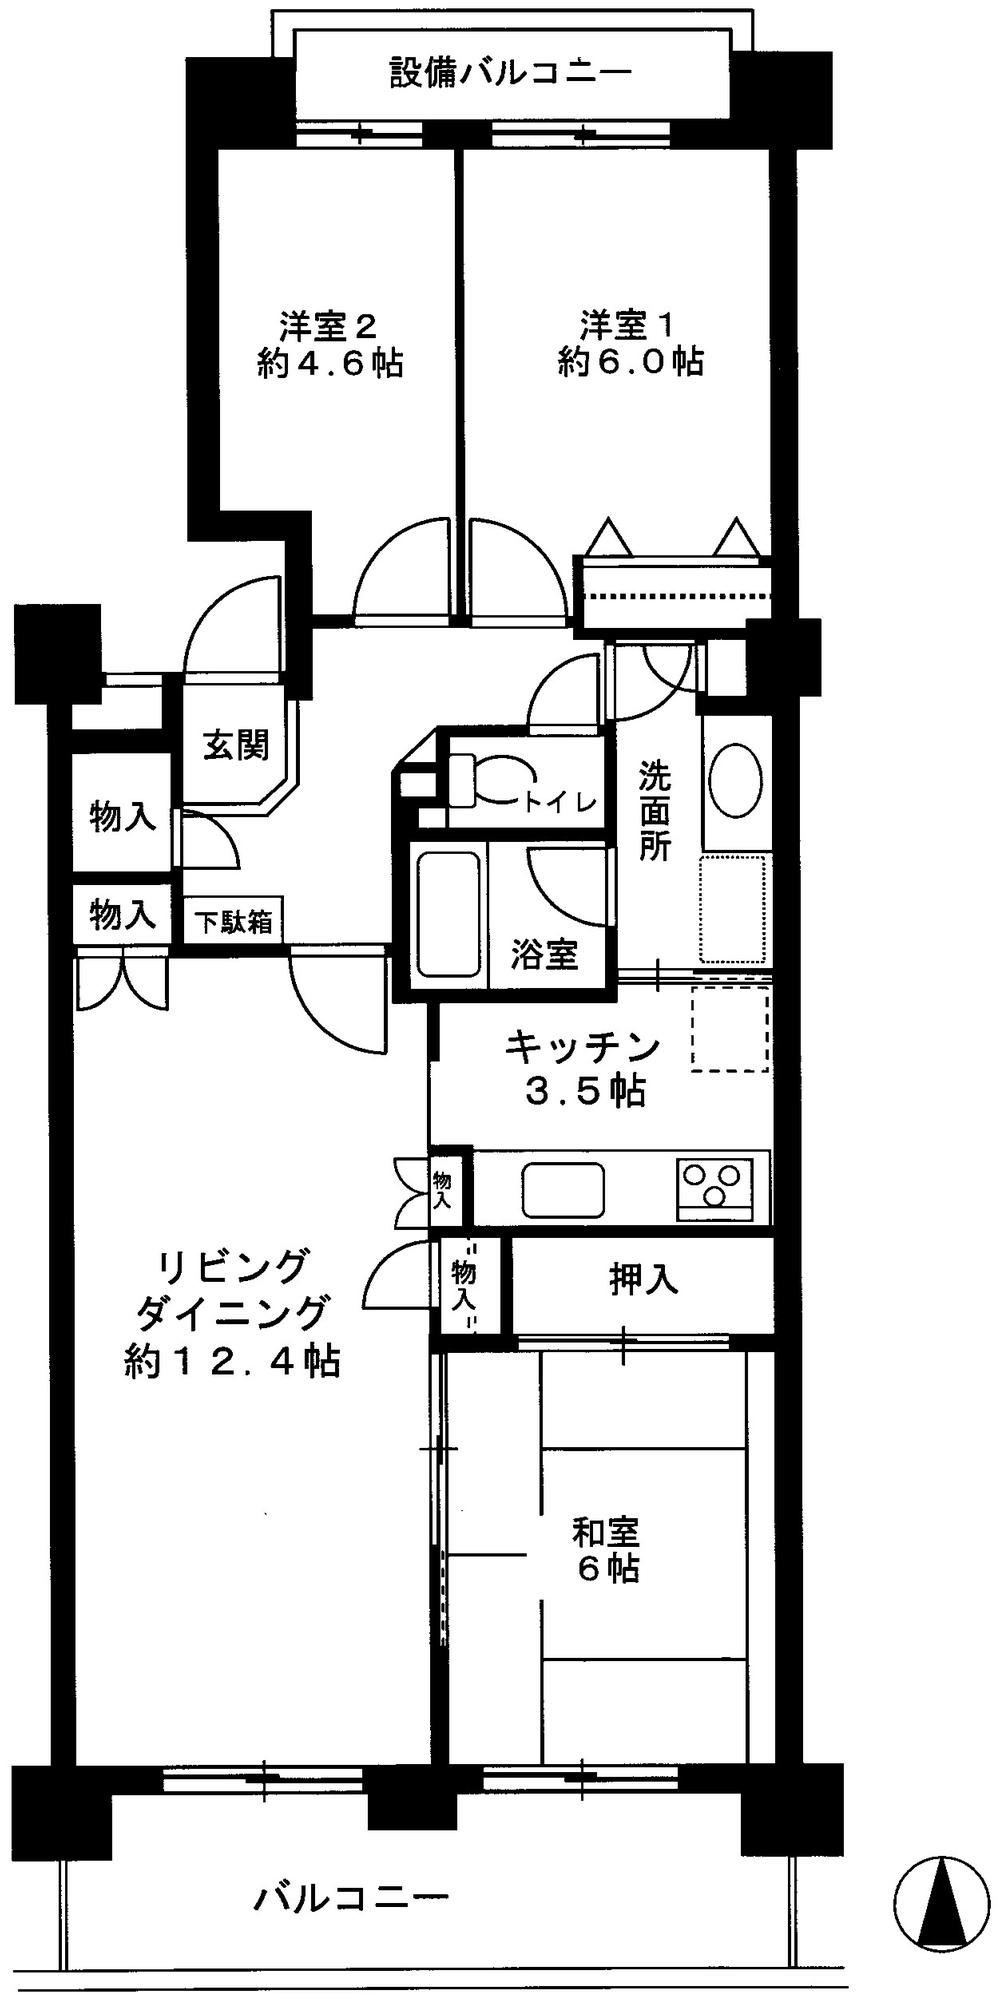 Floor plan. 3LDK, Price 12.8 million yen, Occupied area 74.58 sq m , Balcony area 10.2 sq m